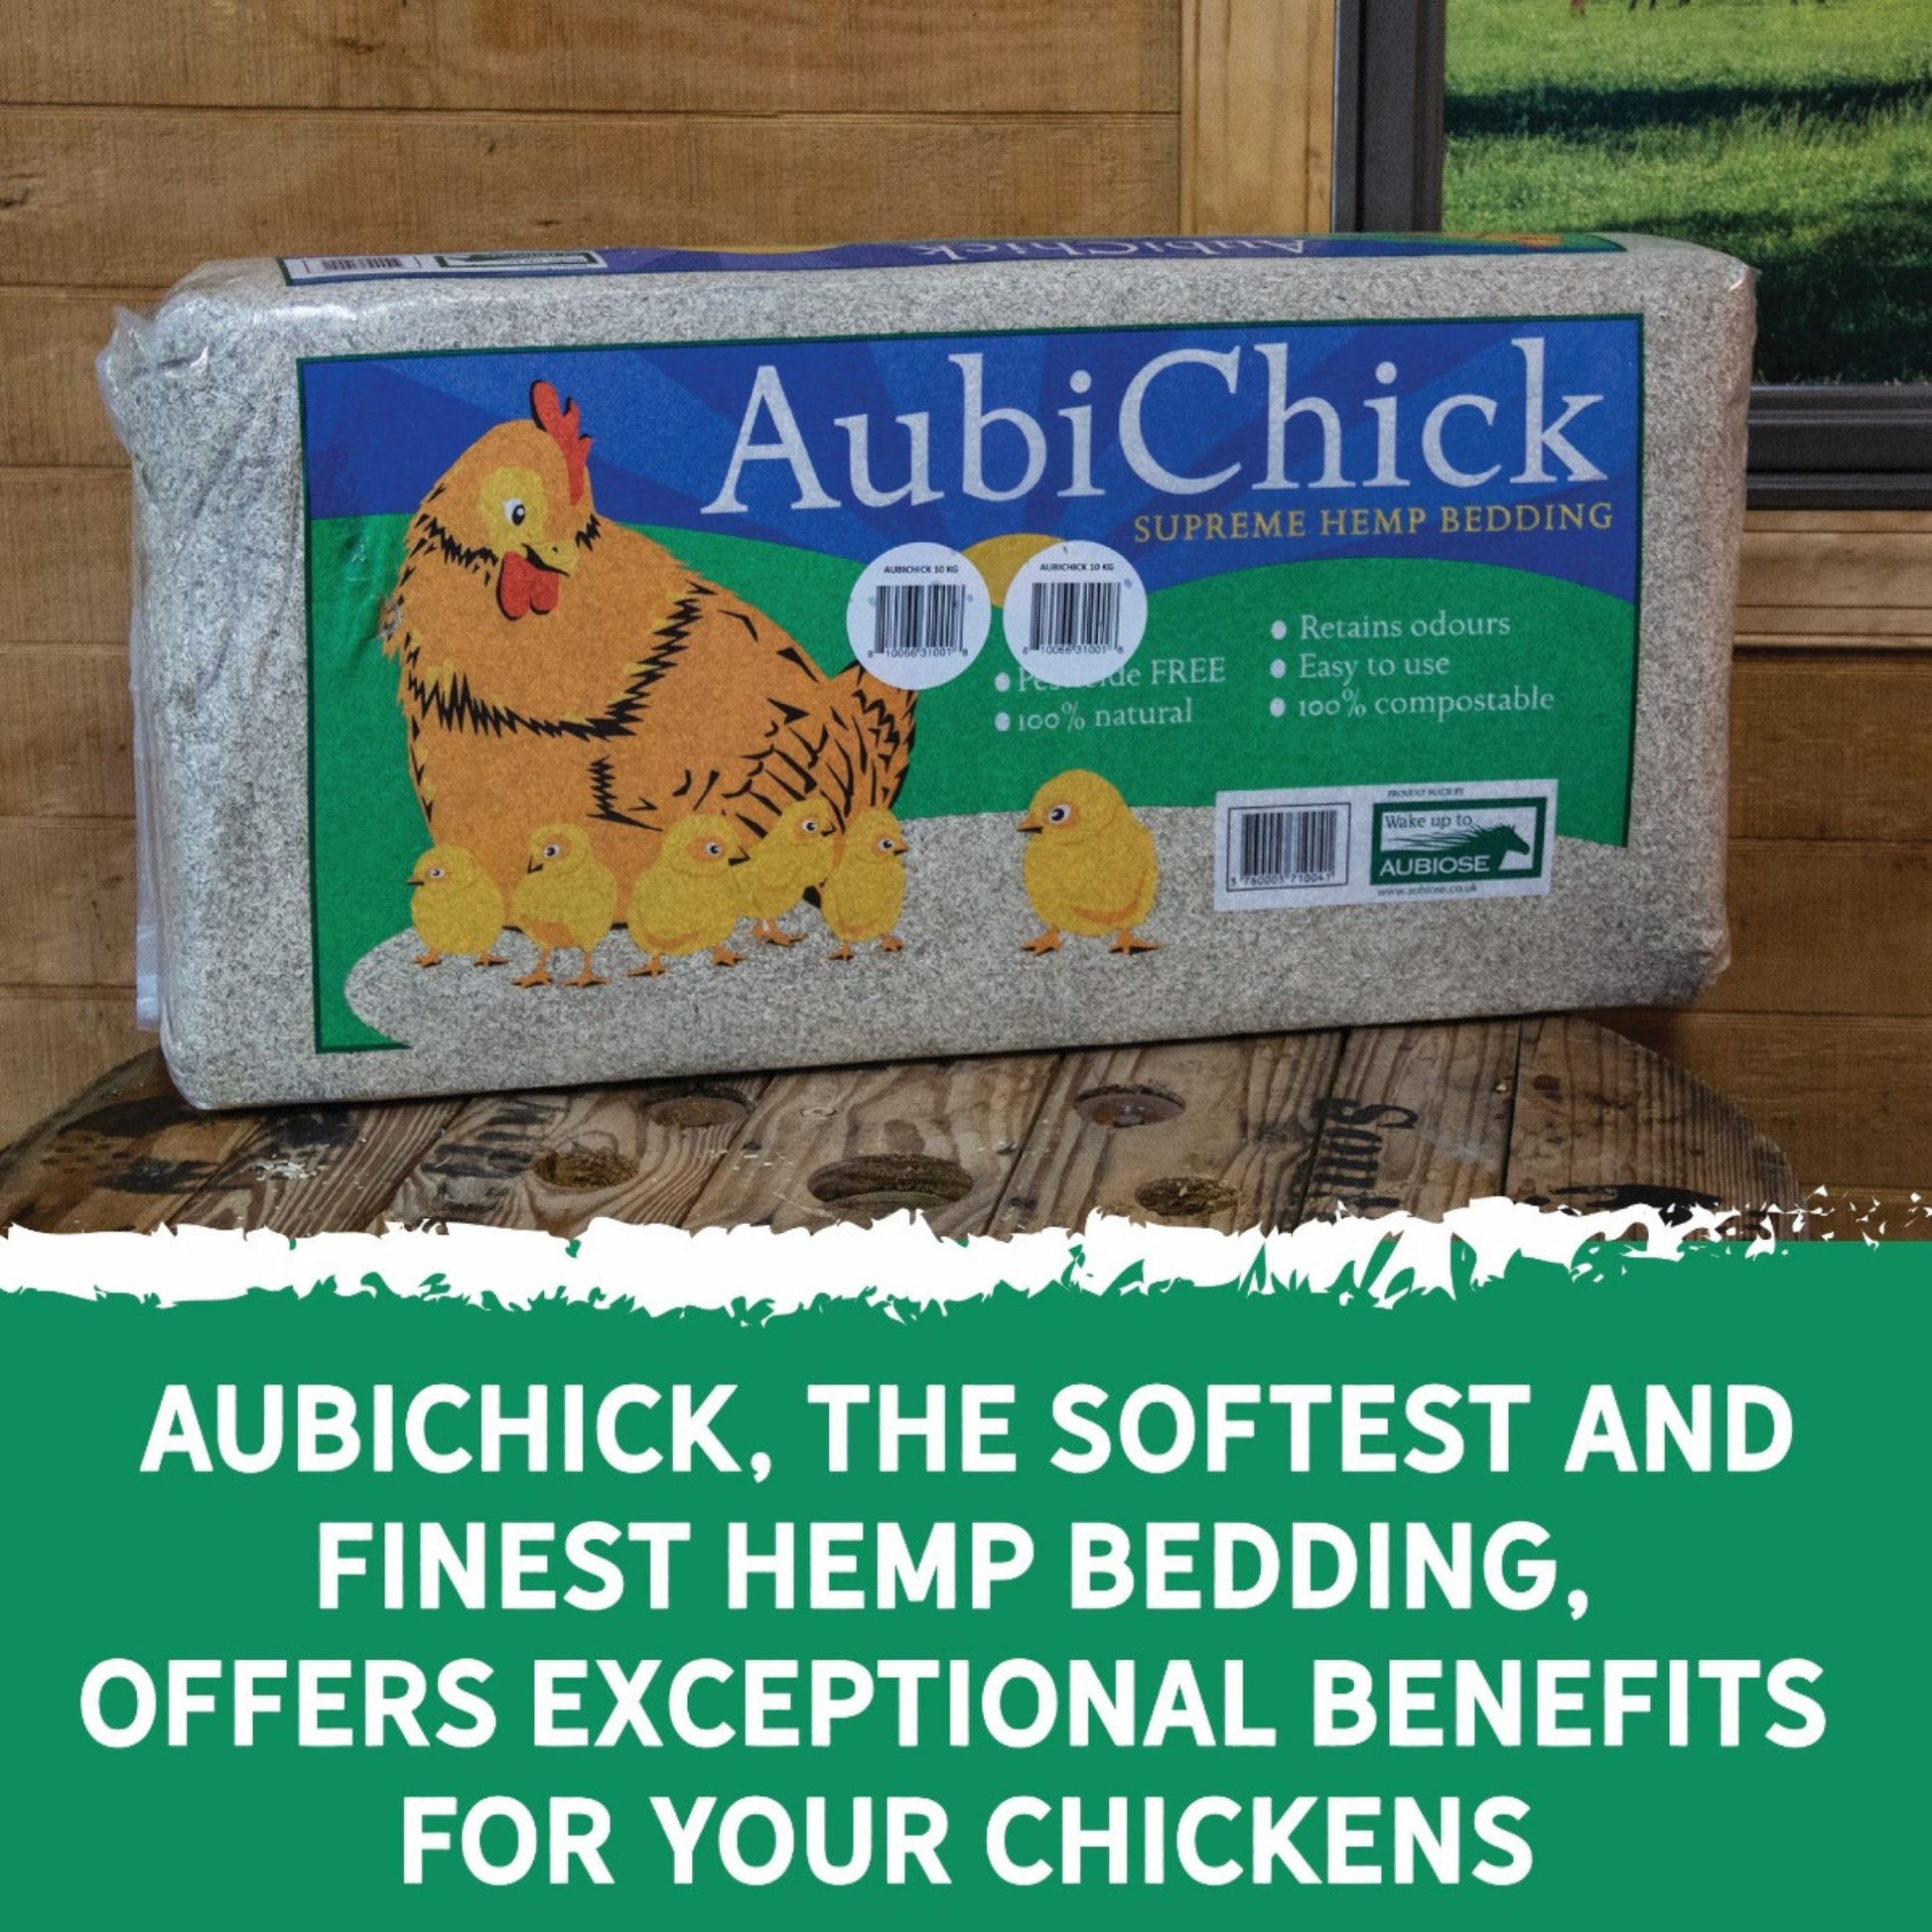 AubiChick's Hemp Bedding boasts a light color and a fluffy texture.